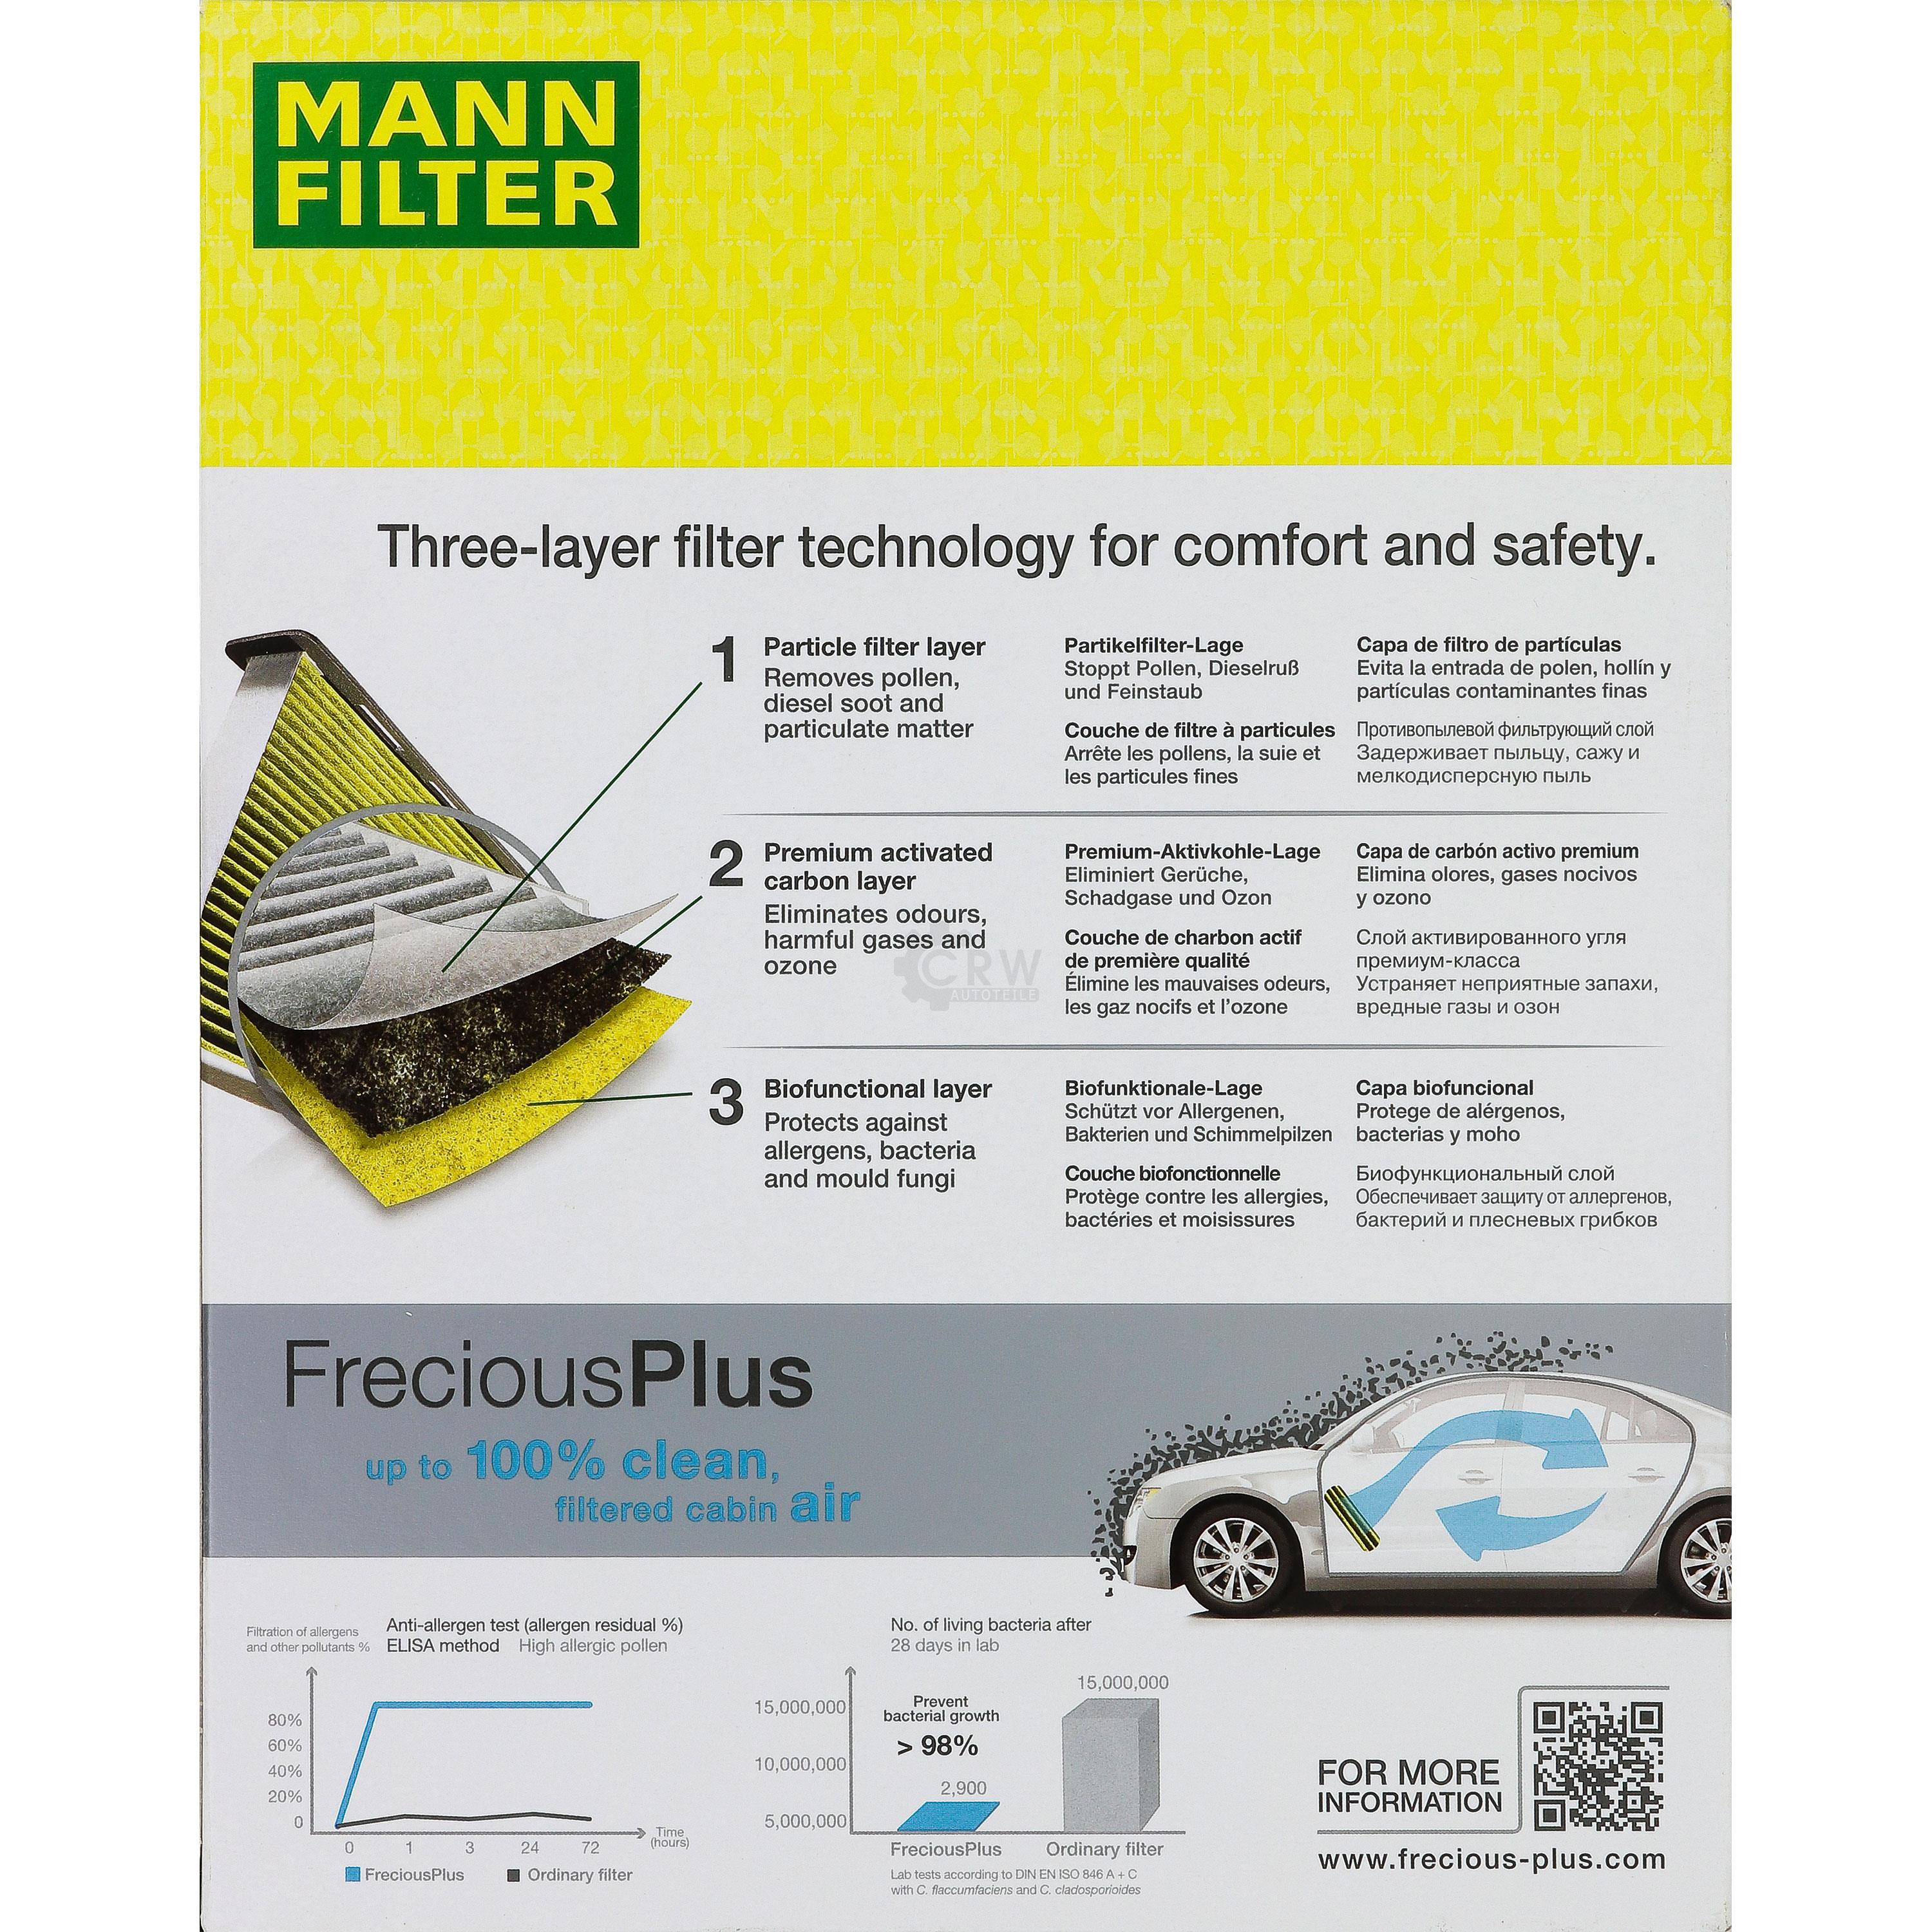 MANN-Filter Innenraumfilter Biofunctional für Allergiker FP 25 007